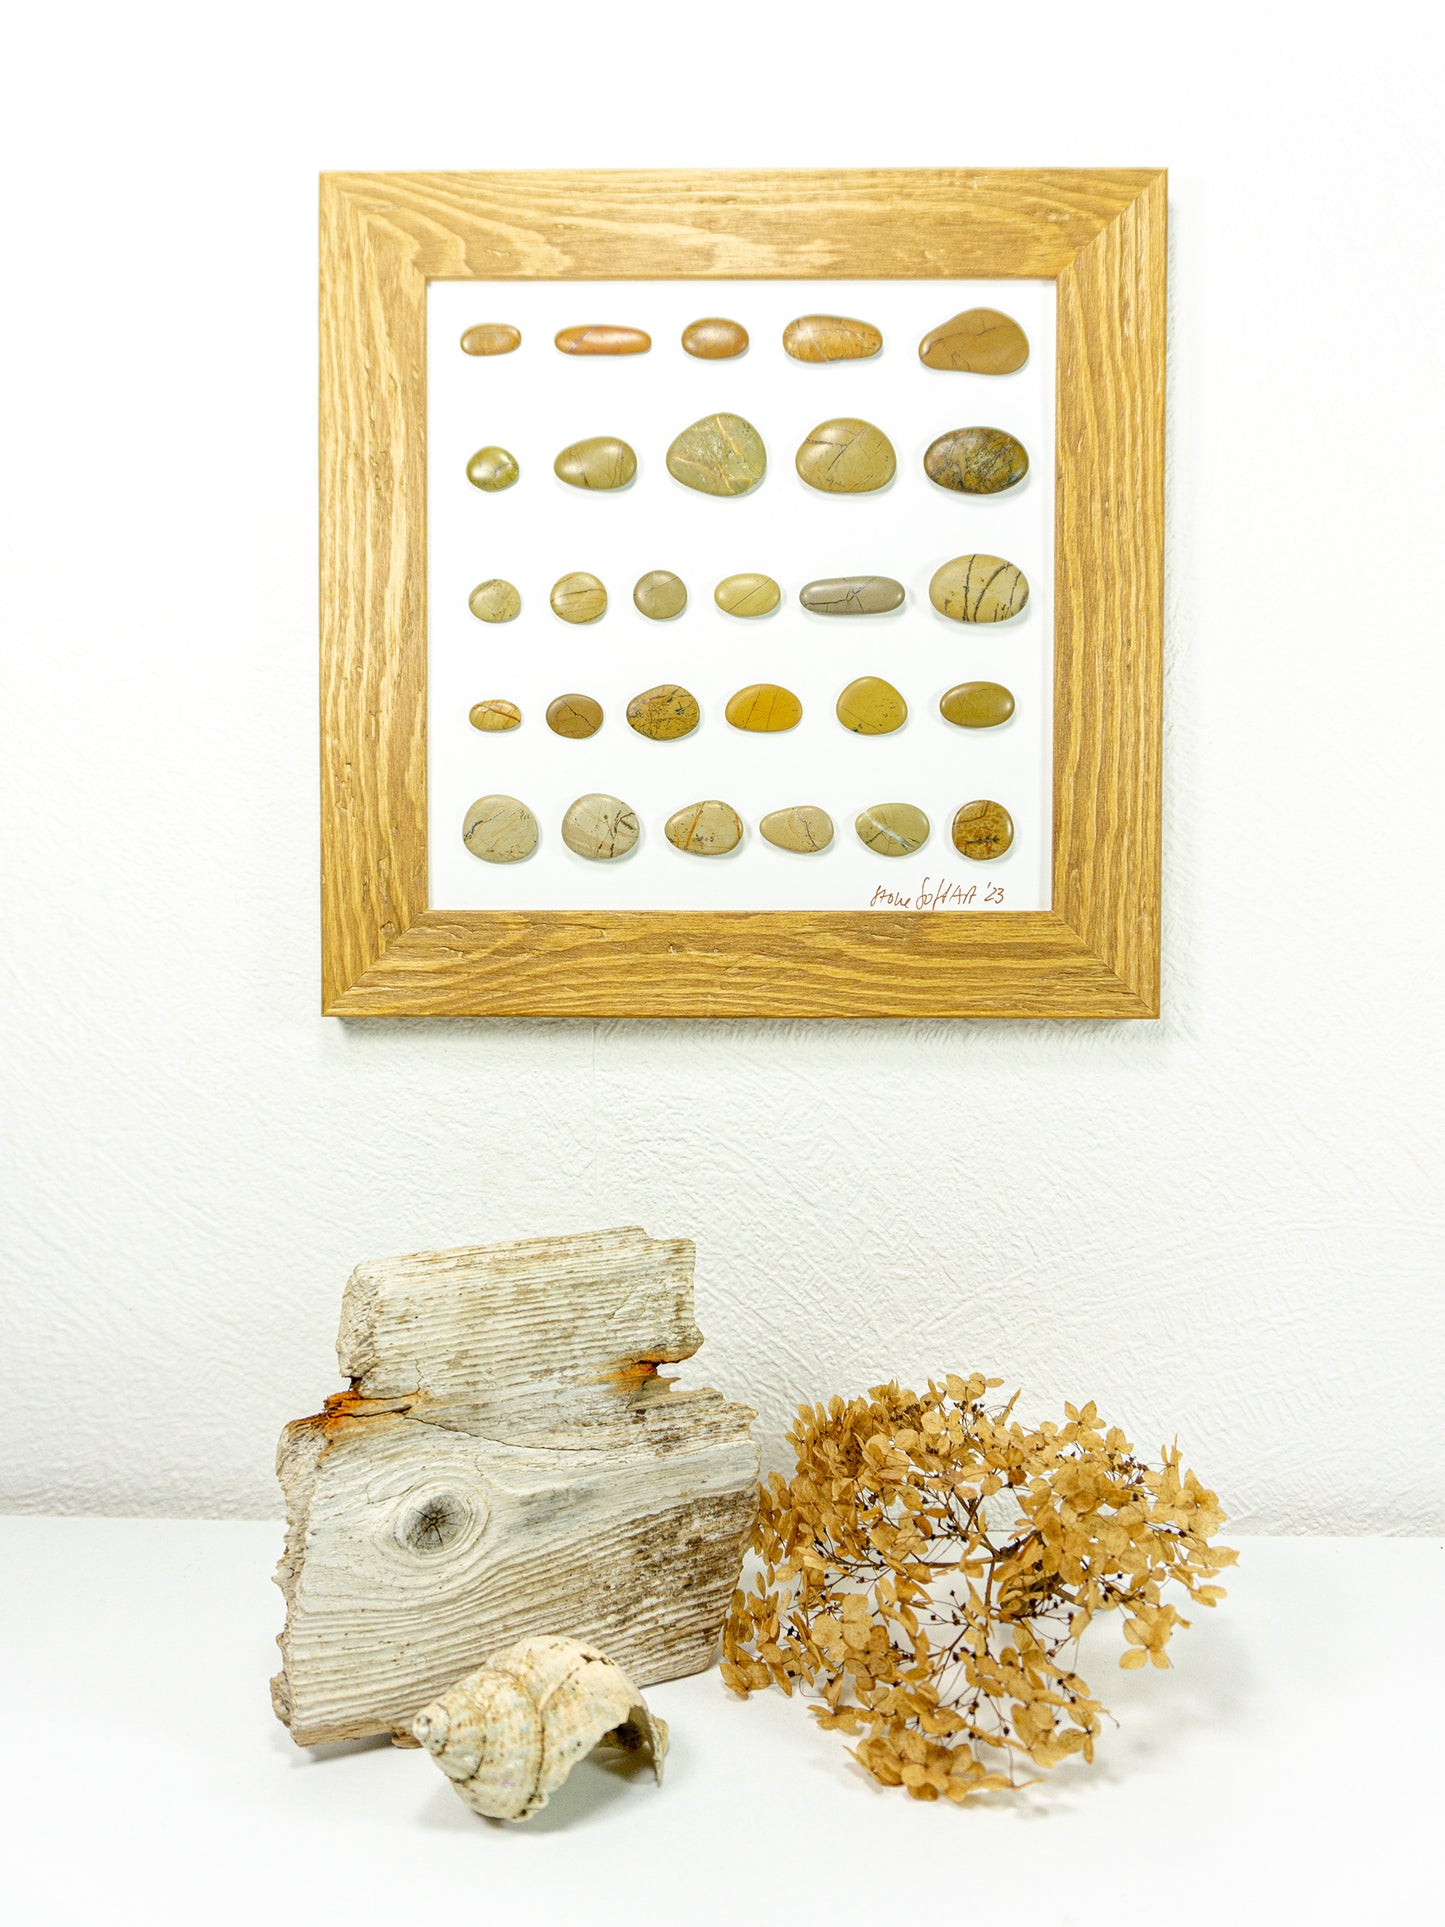 Unique BEACH PEBBLES WALL ART "Moneglia", framed handmade stones picture